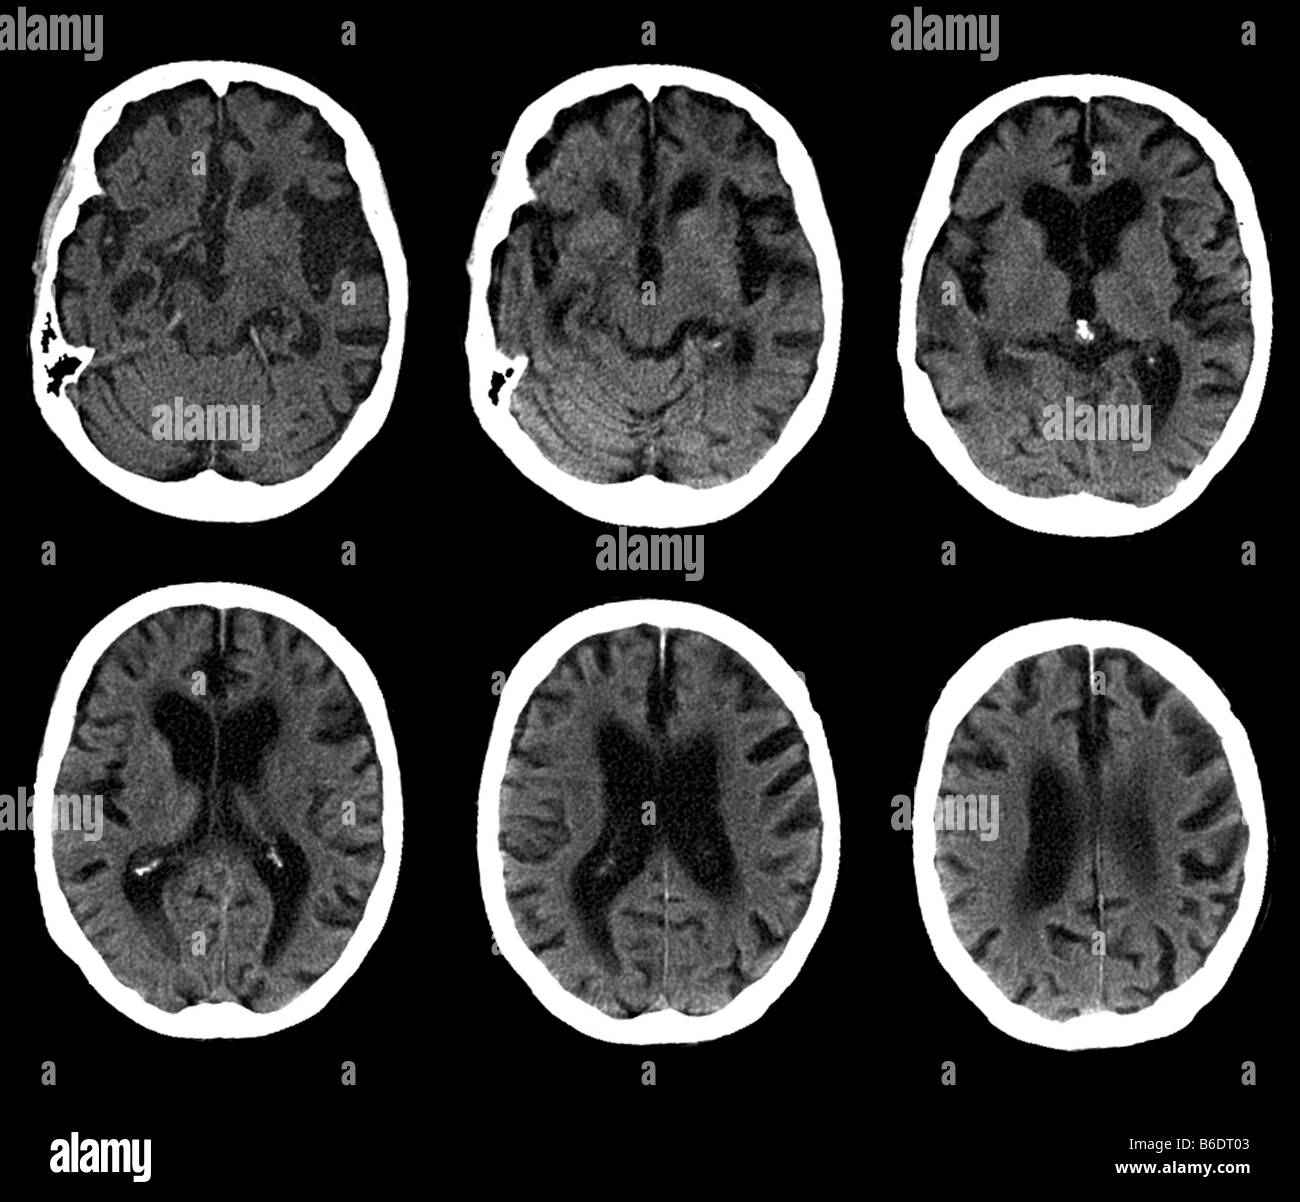 Alzheimer's Disease Brain CT Scan